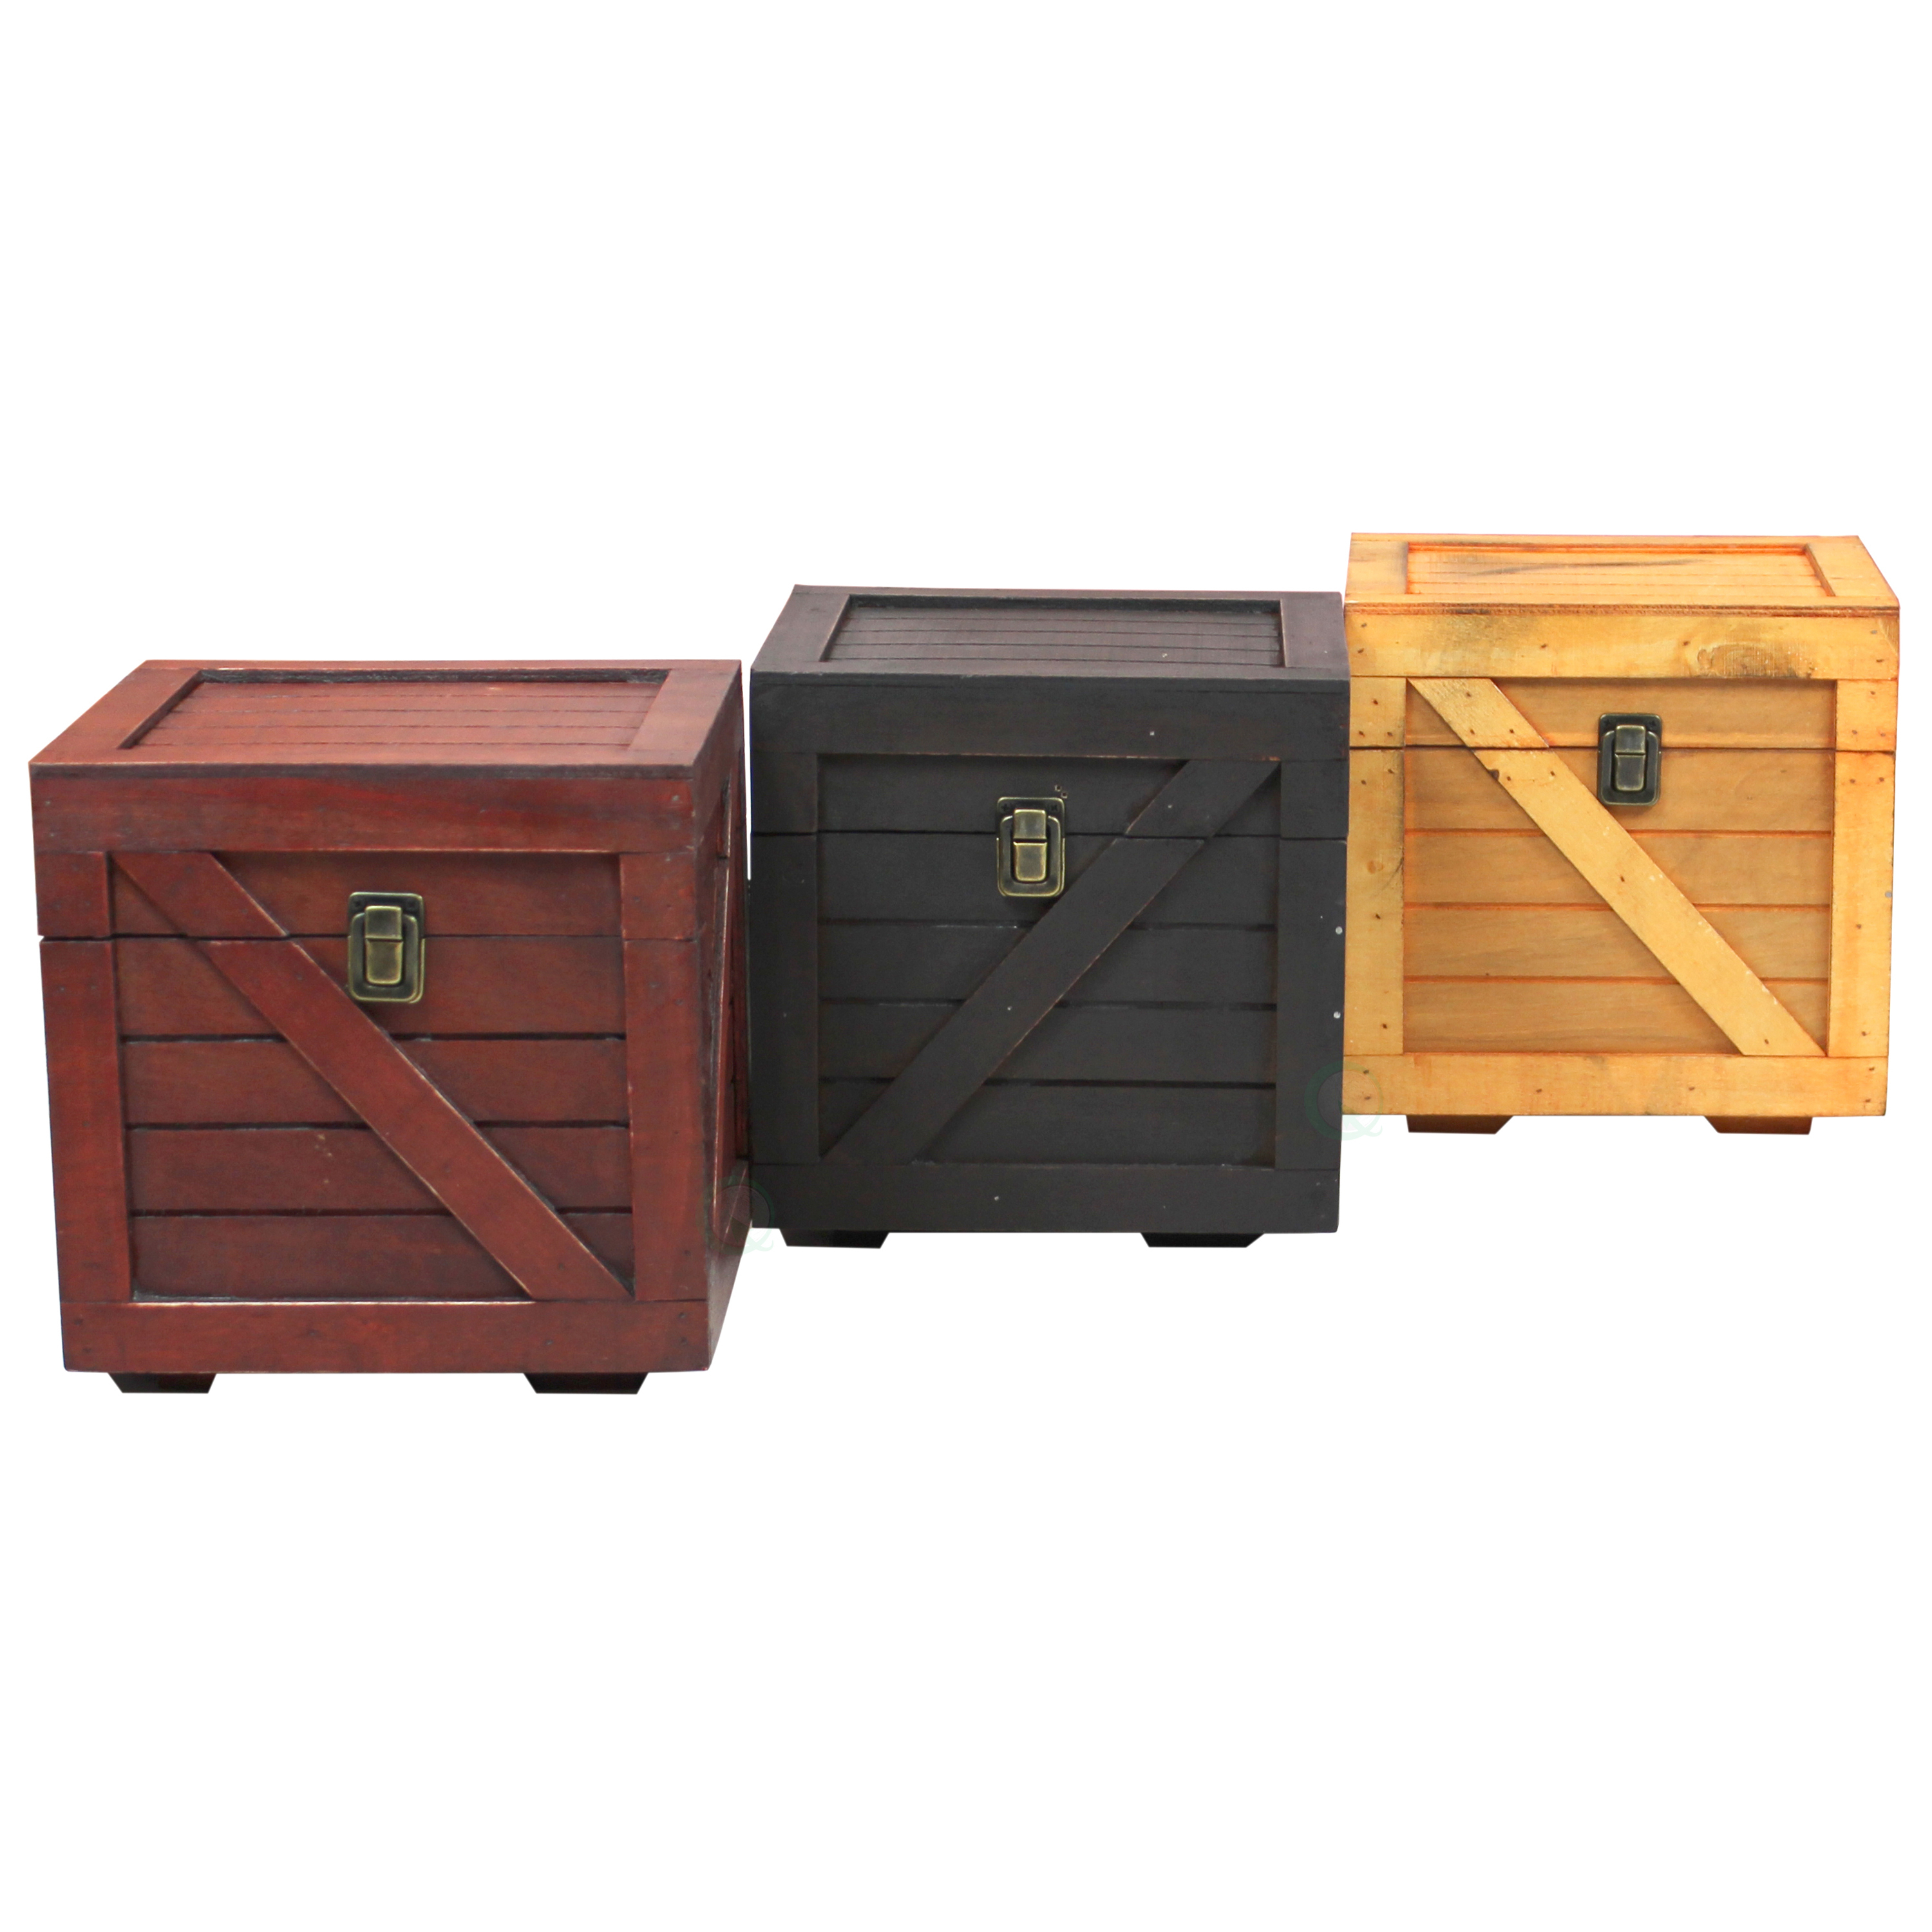 Wooden Stackable Lidded Crate - Light Brown